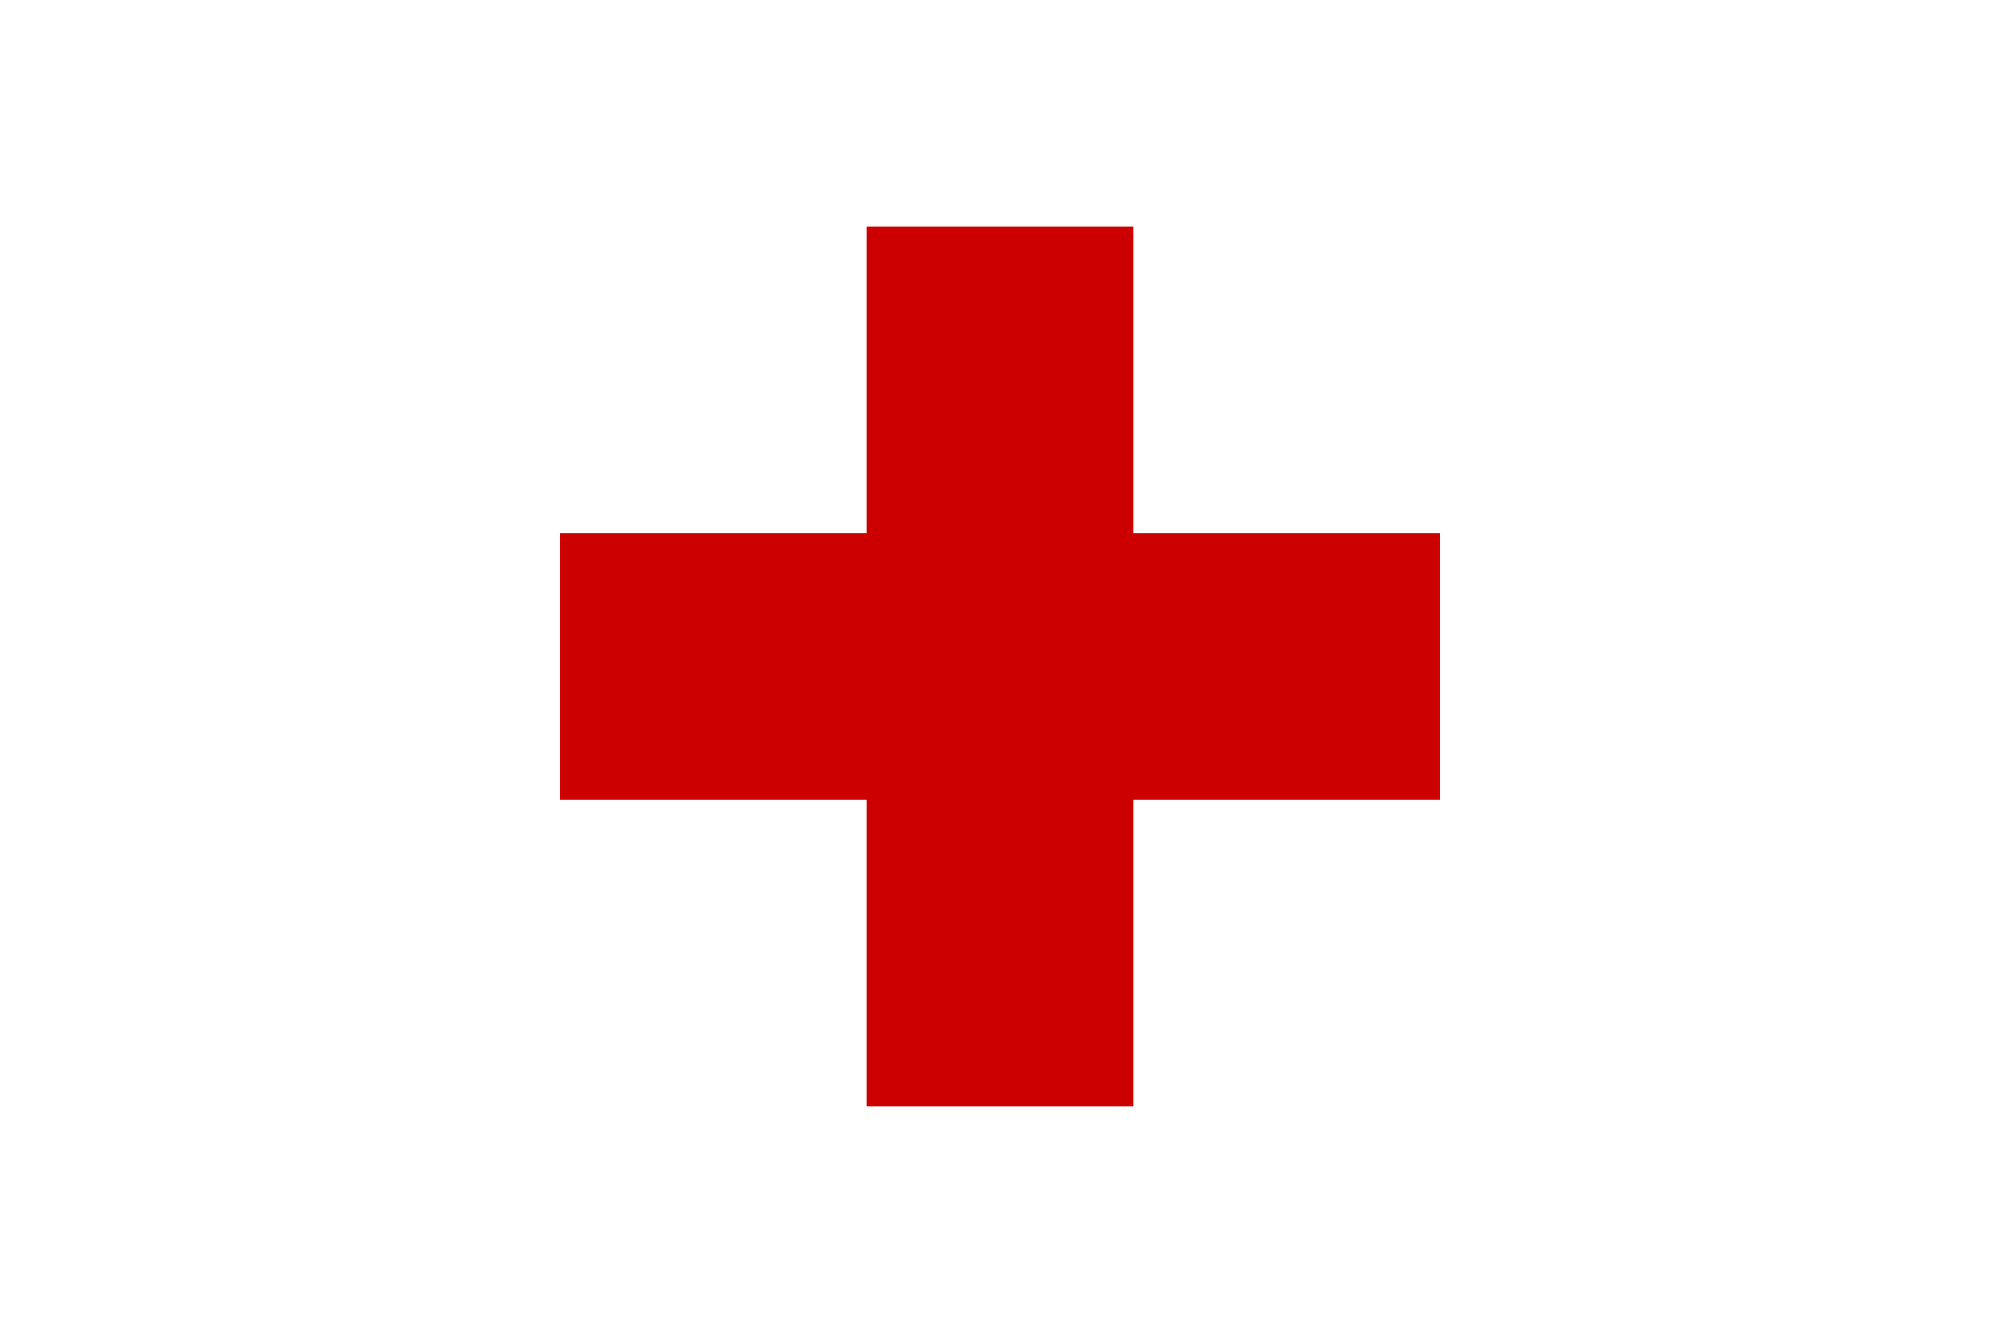 Indian Red Cross Society logo